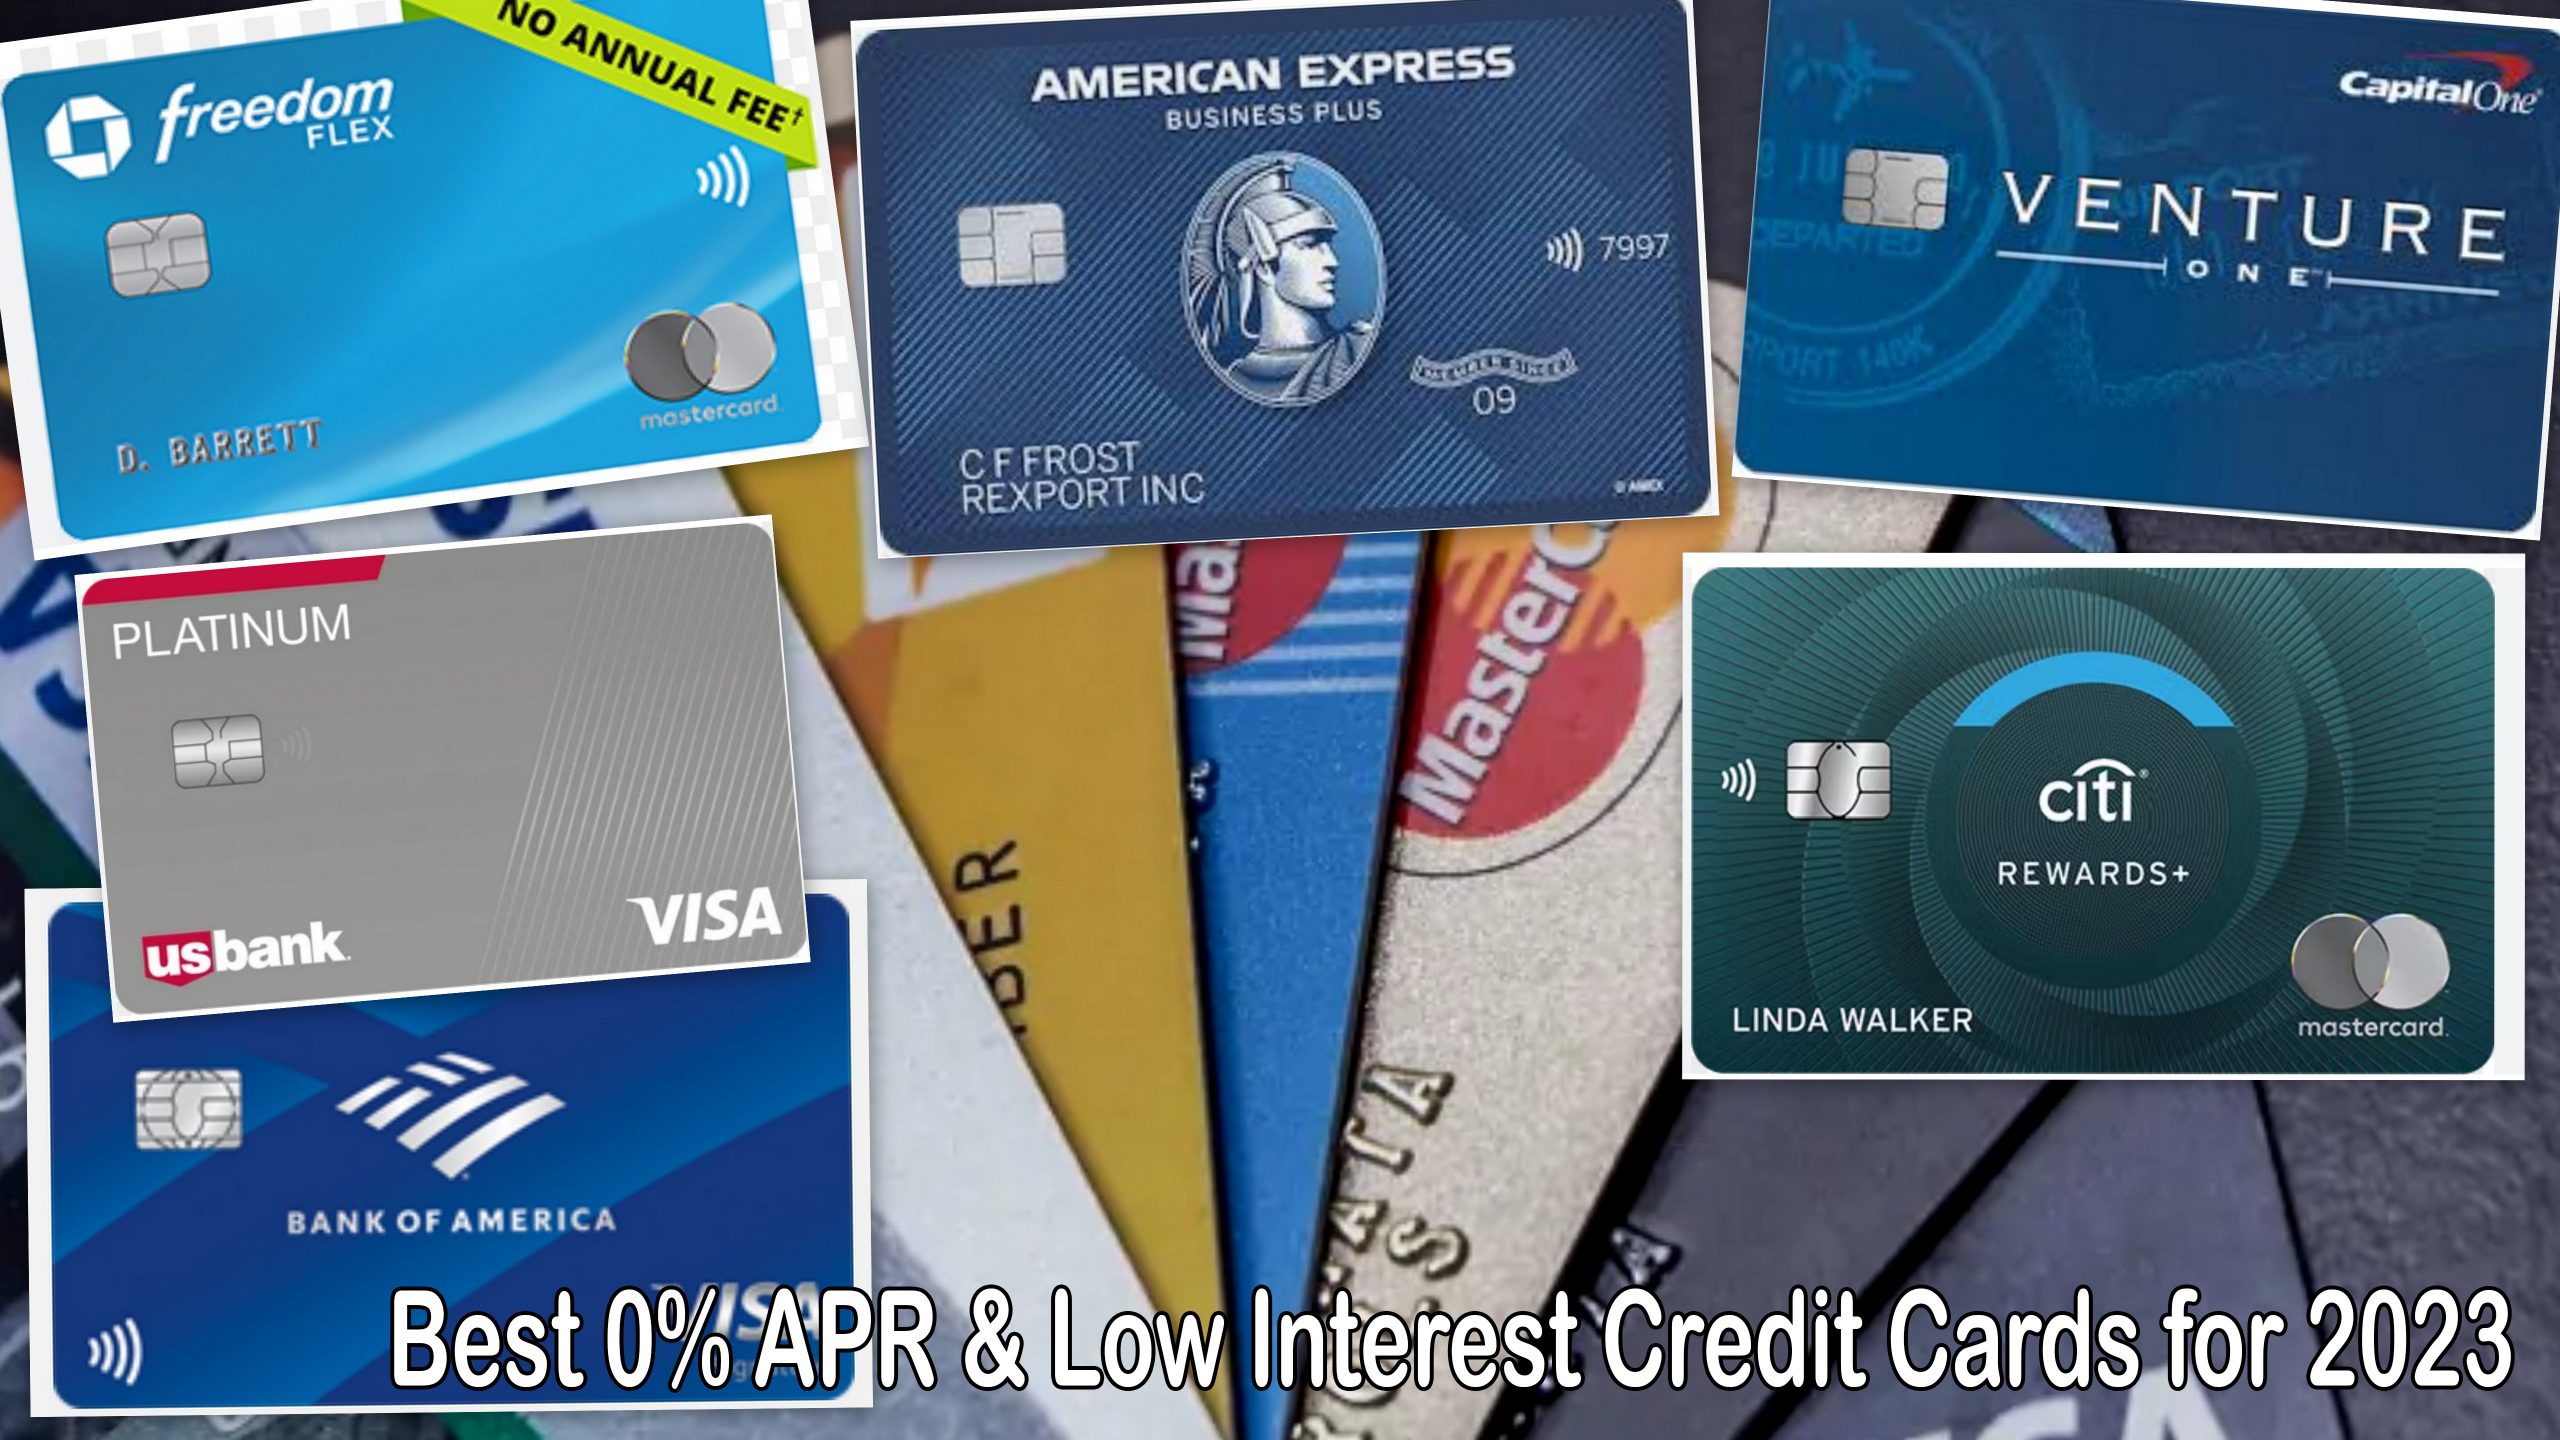 Best 0% APR & Low Interest Credit Cards for 2023